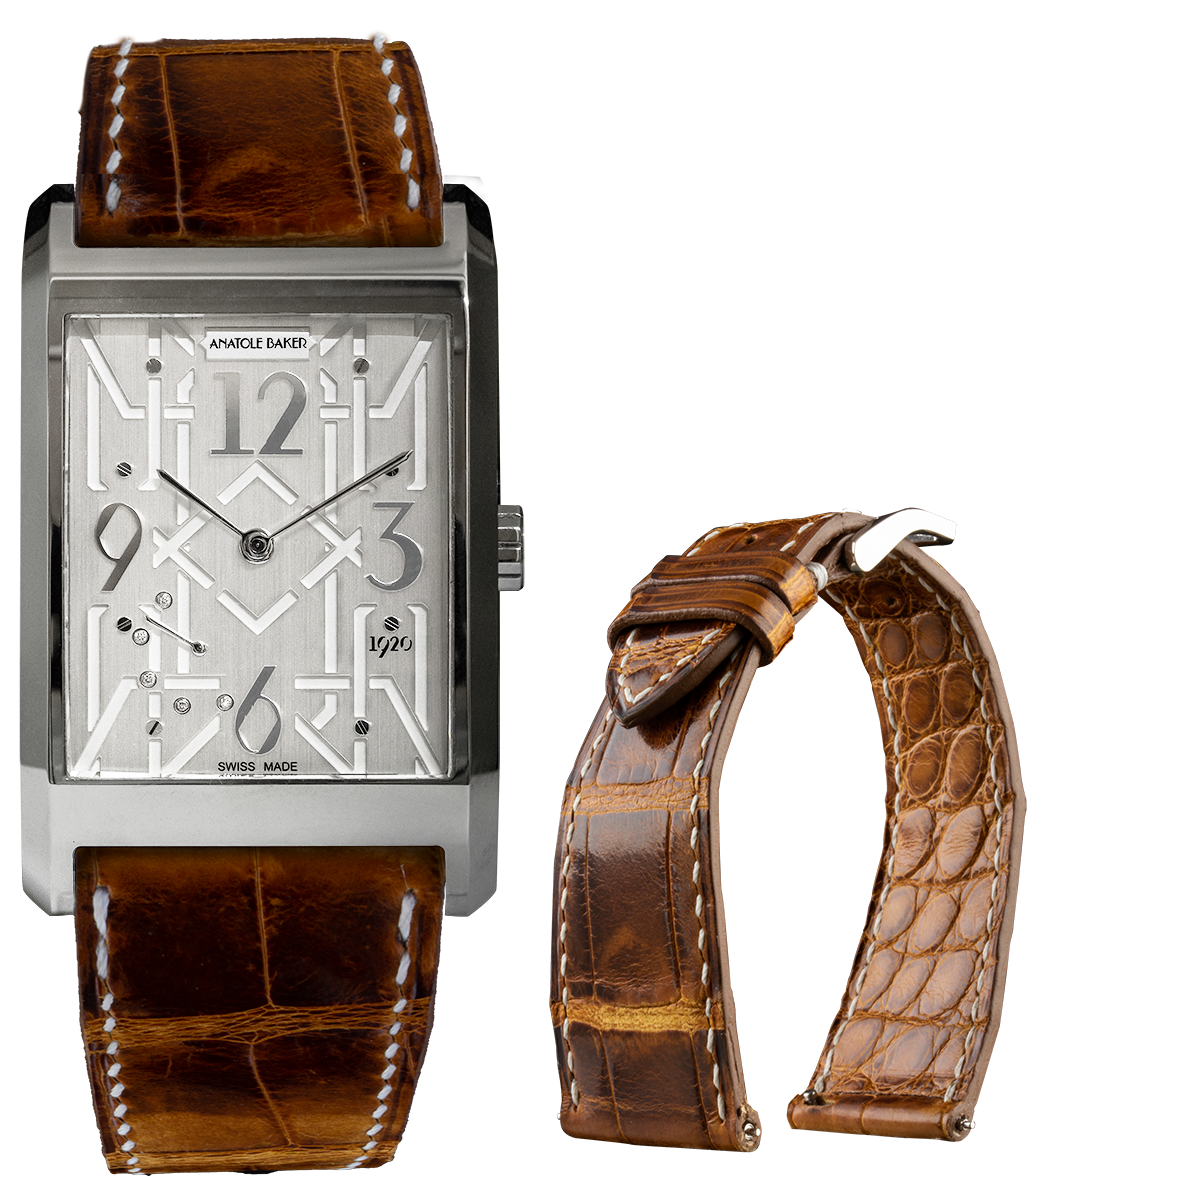 ANATOLE BAKER 1920 watch - Dandy white diamonds - Waxed brown alligator strap